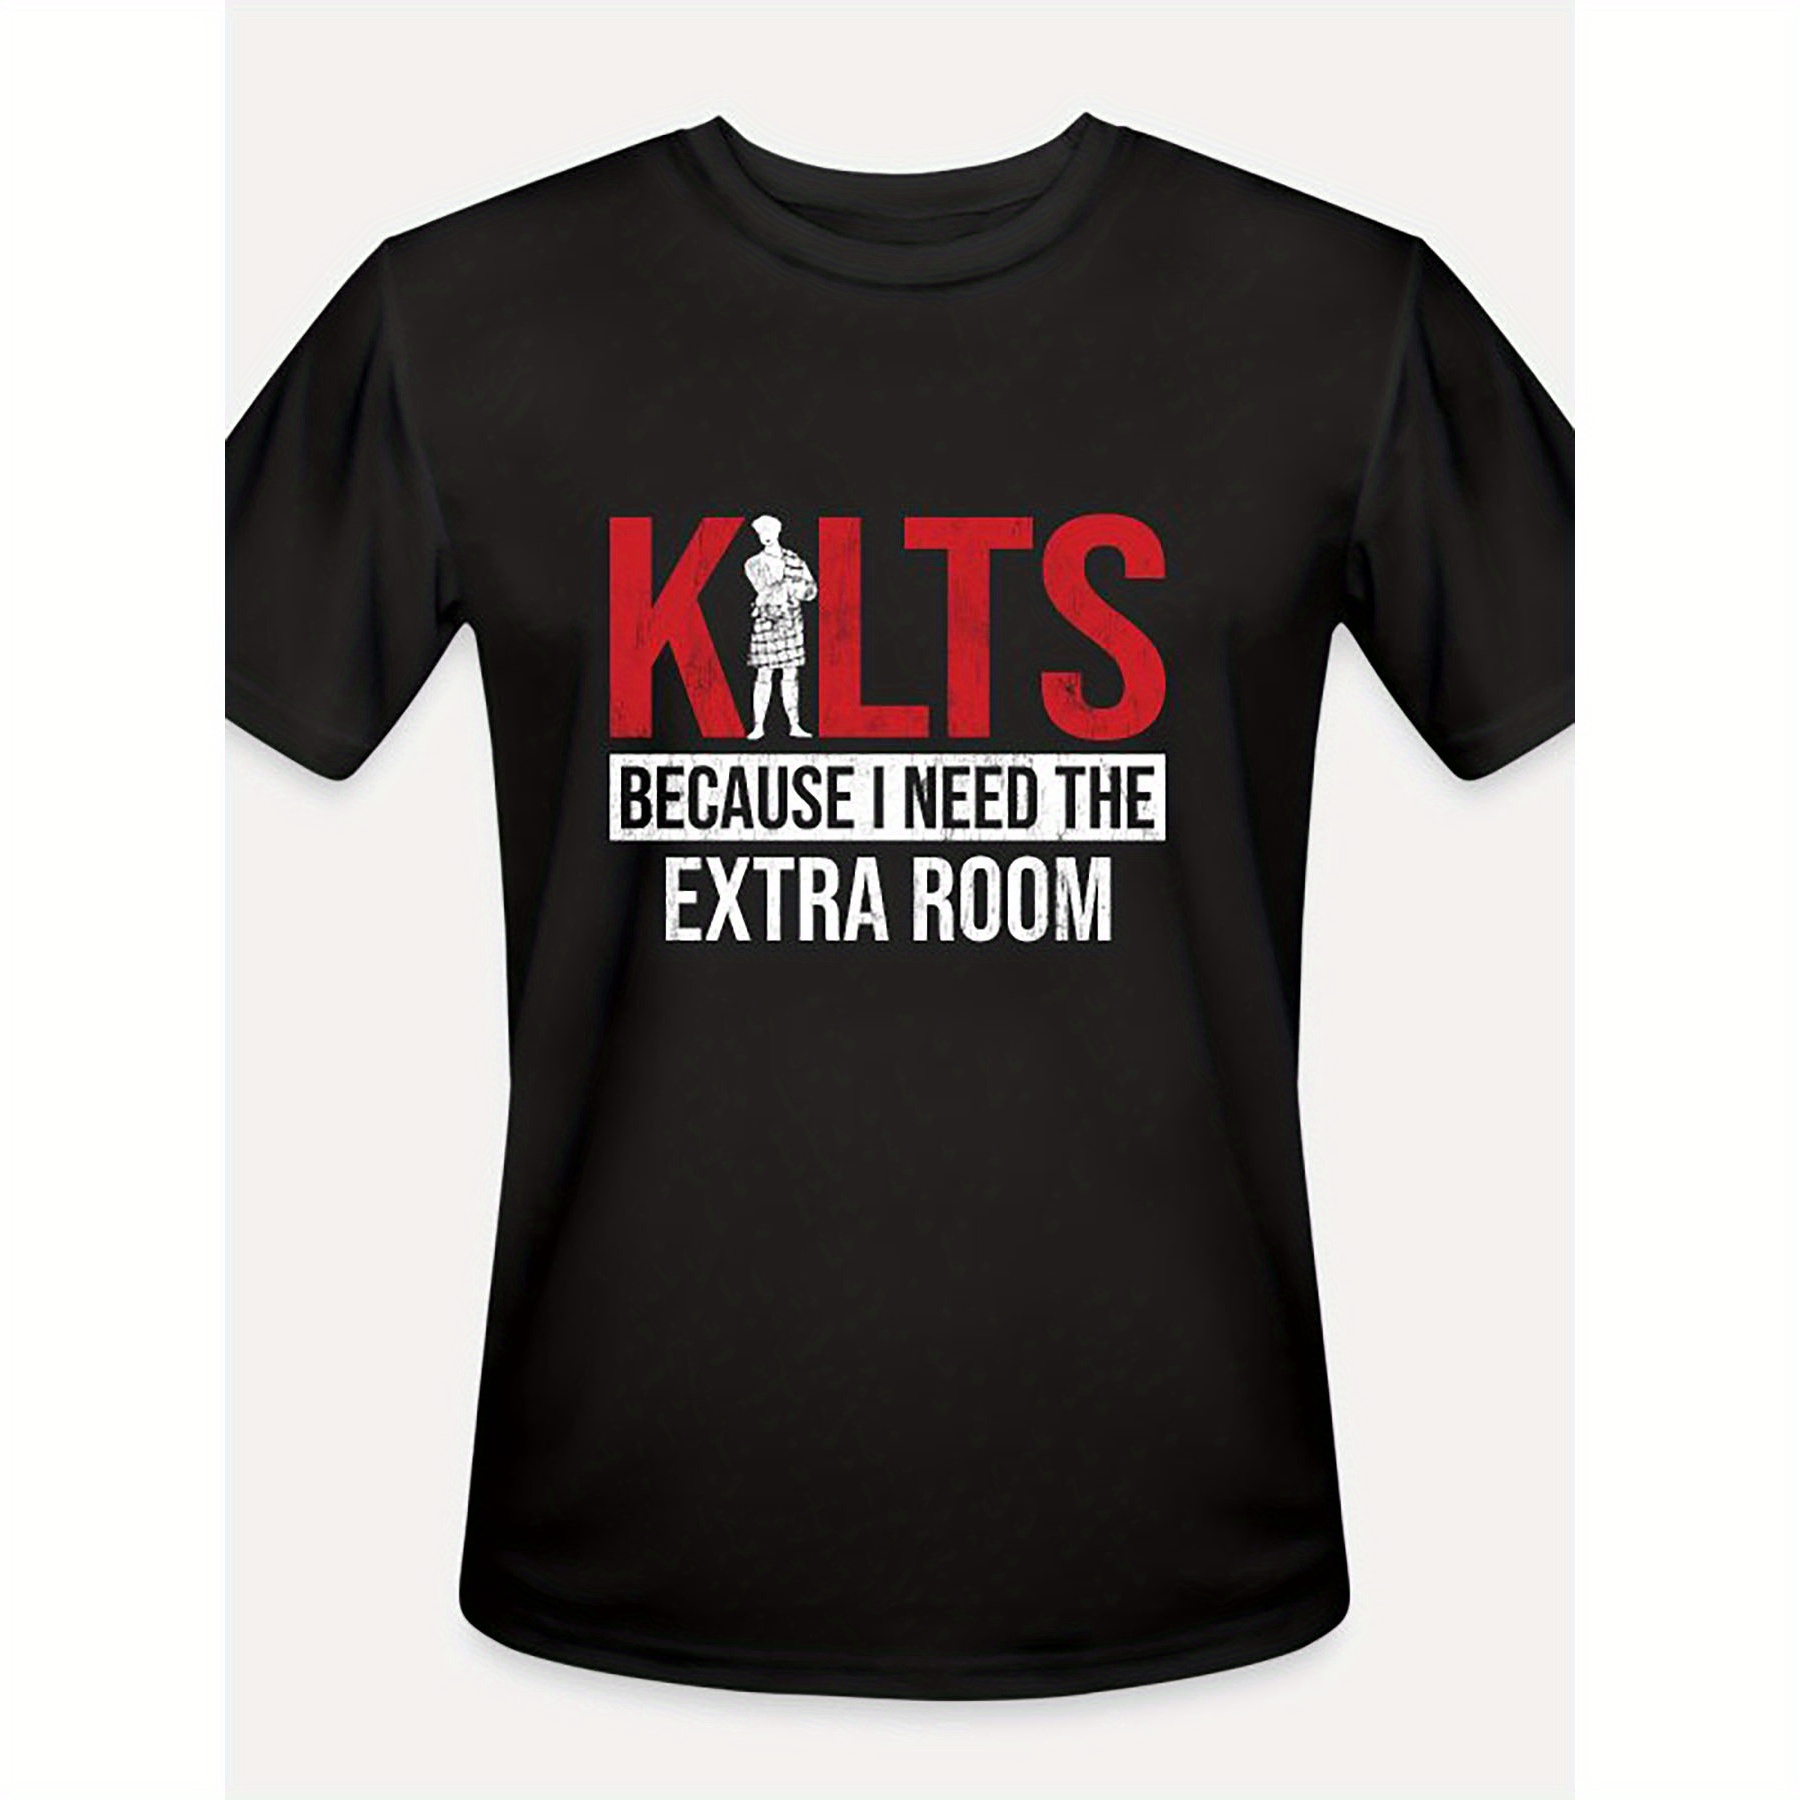 

Kilt Scottish Kilts-4327 Funny Men's Short Sleeve Graphic T-shirt Collection Black